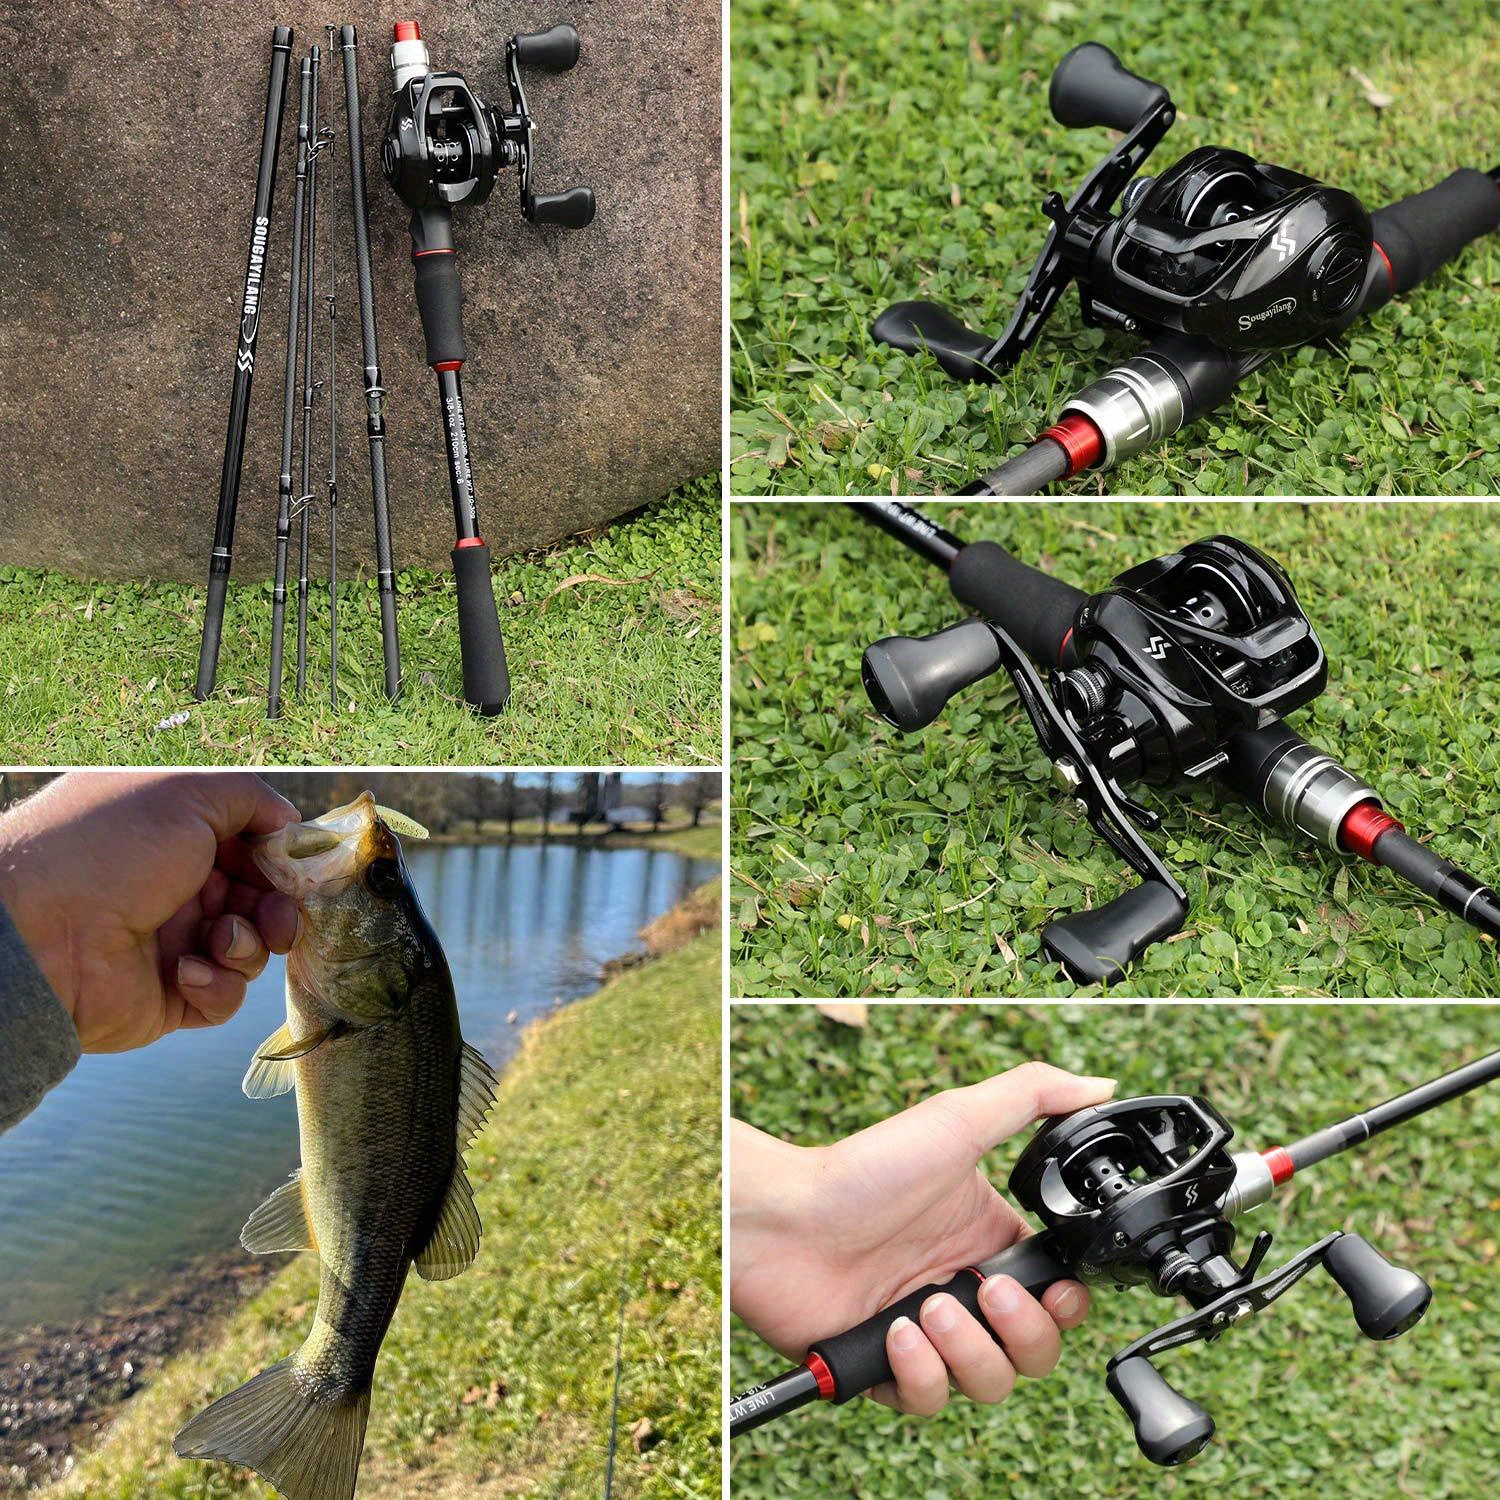 Sougayilang Baitcasting Fishing Rod Reel Combo Portable Pole - Temu